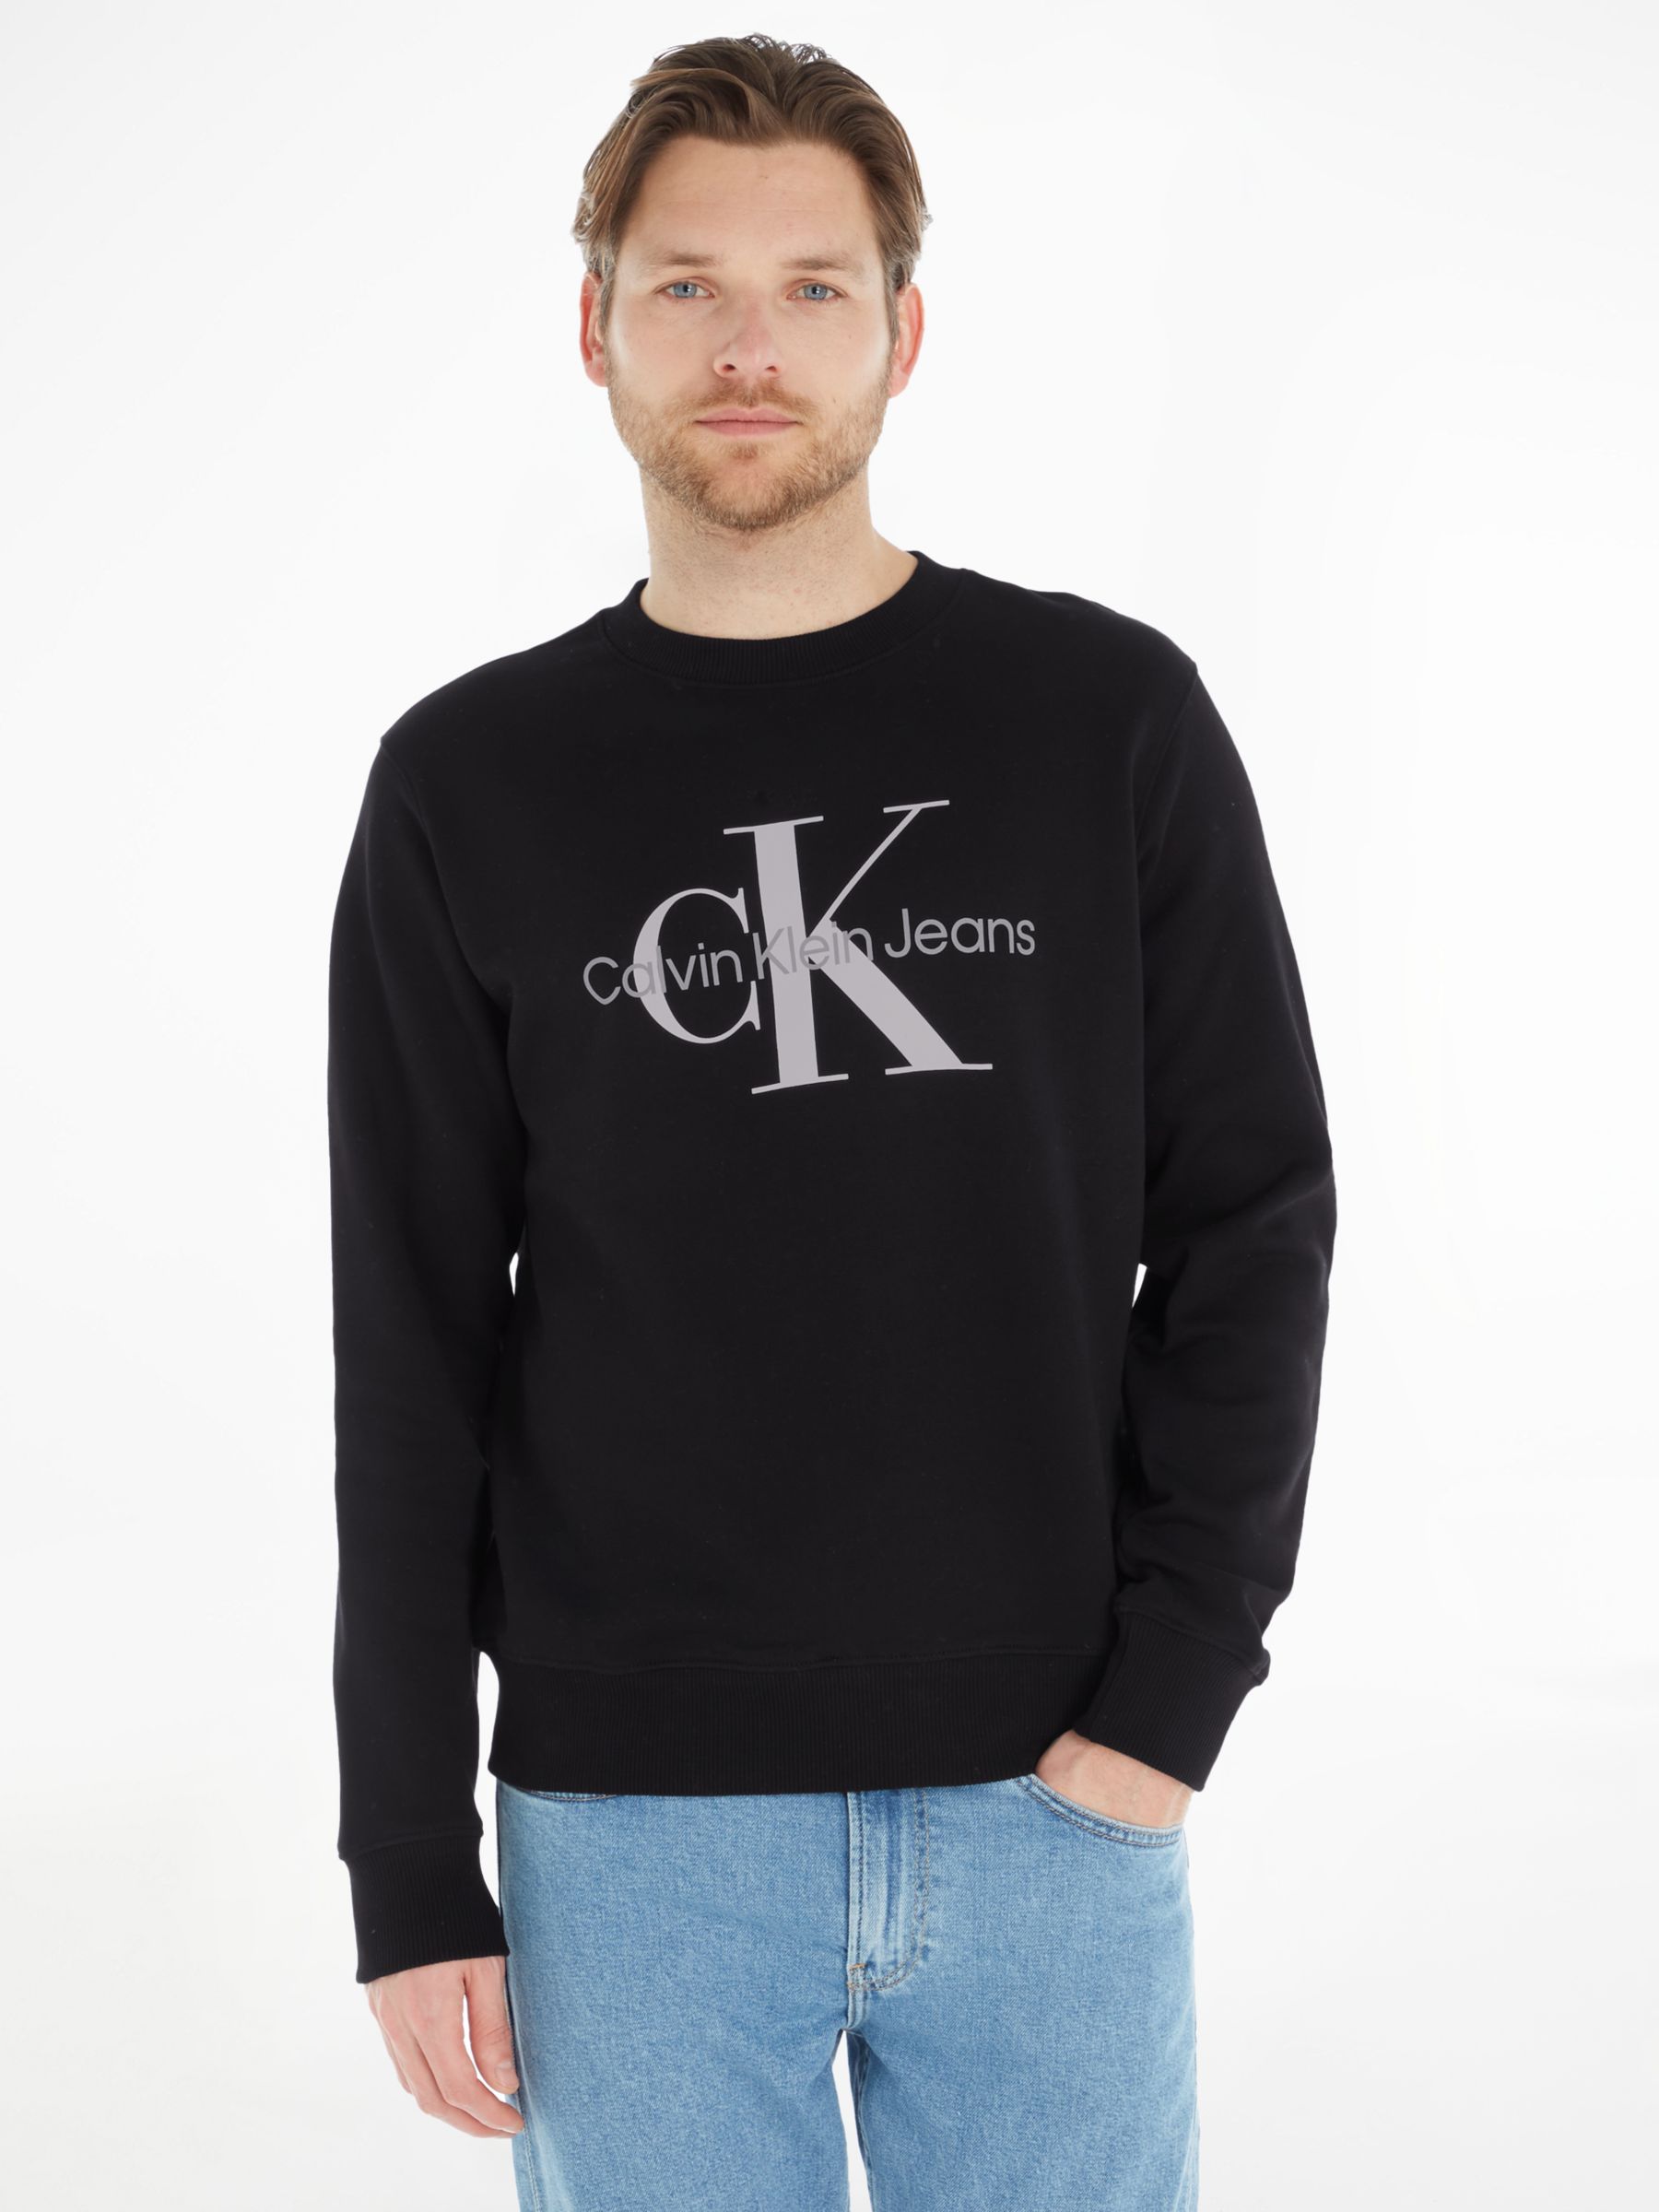 Calvin Klein Jeans Core Monogram Logo Cotton Sweatshirt, Ck Black, XXS